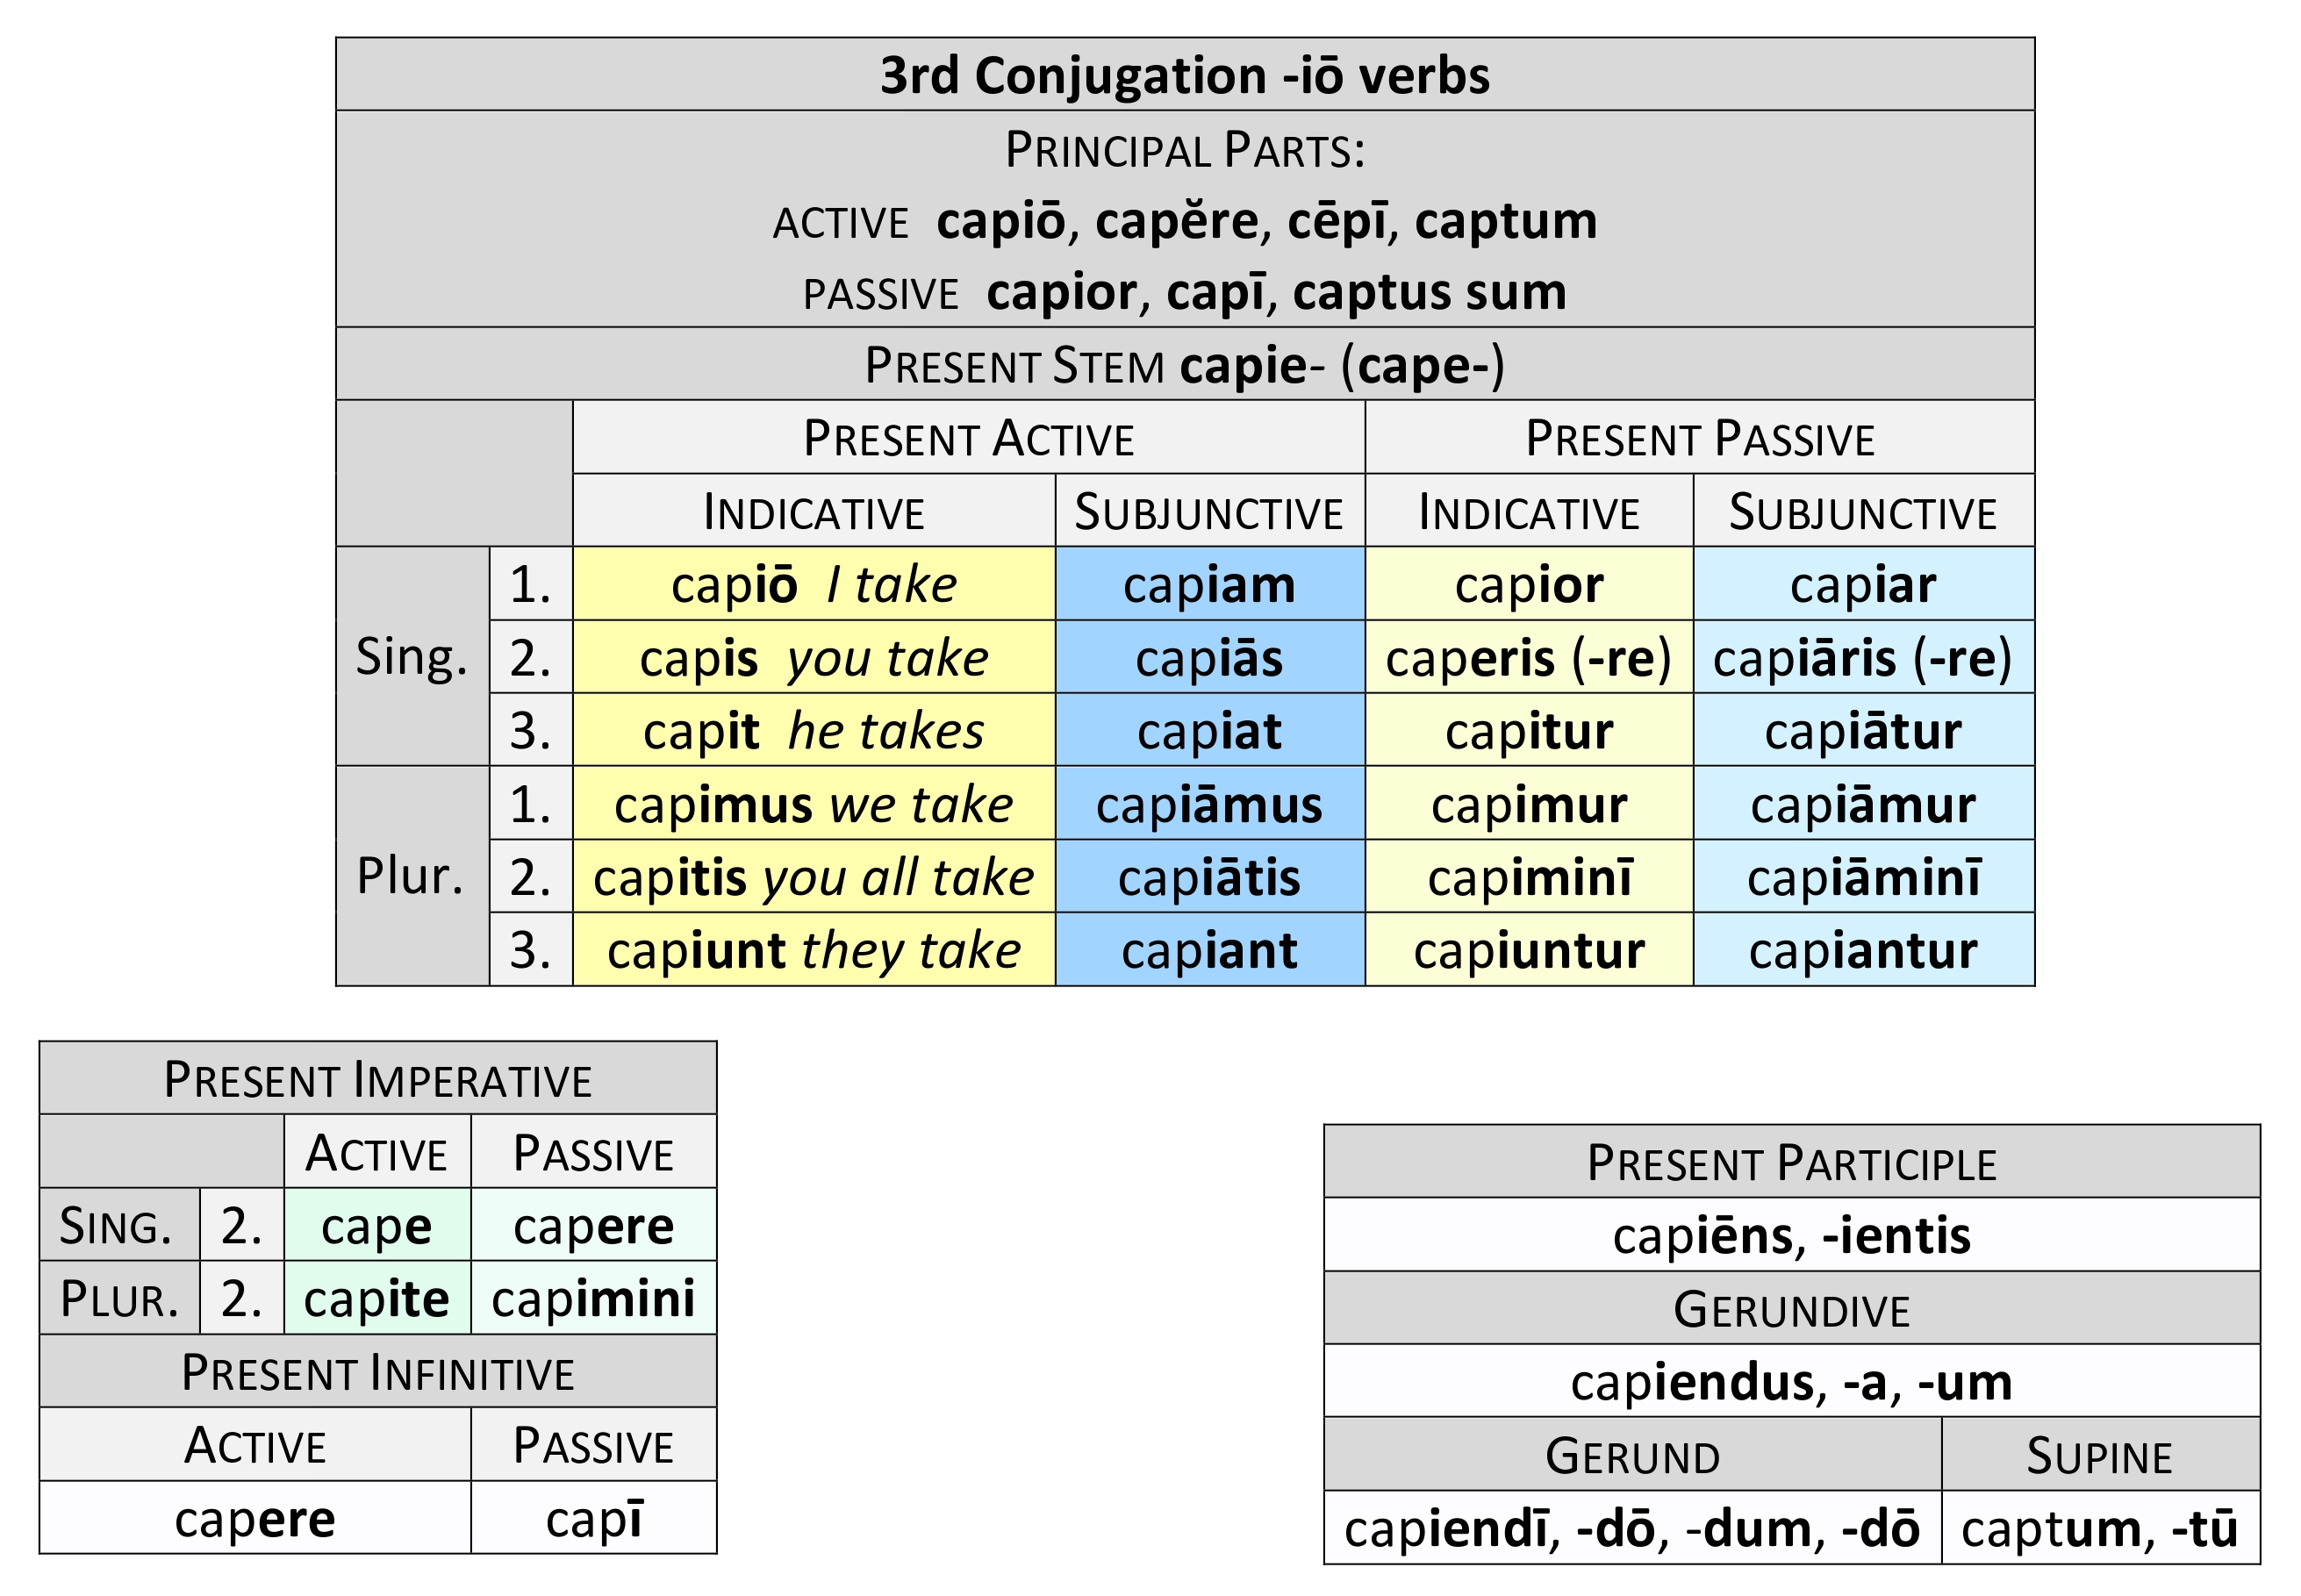 3rd Conjugation in -iō Present paradigm.